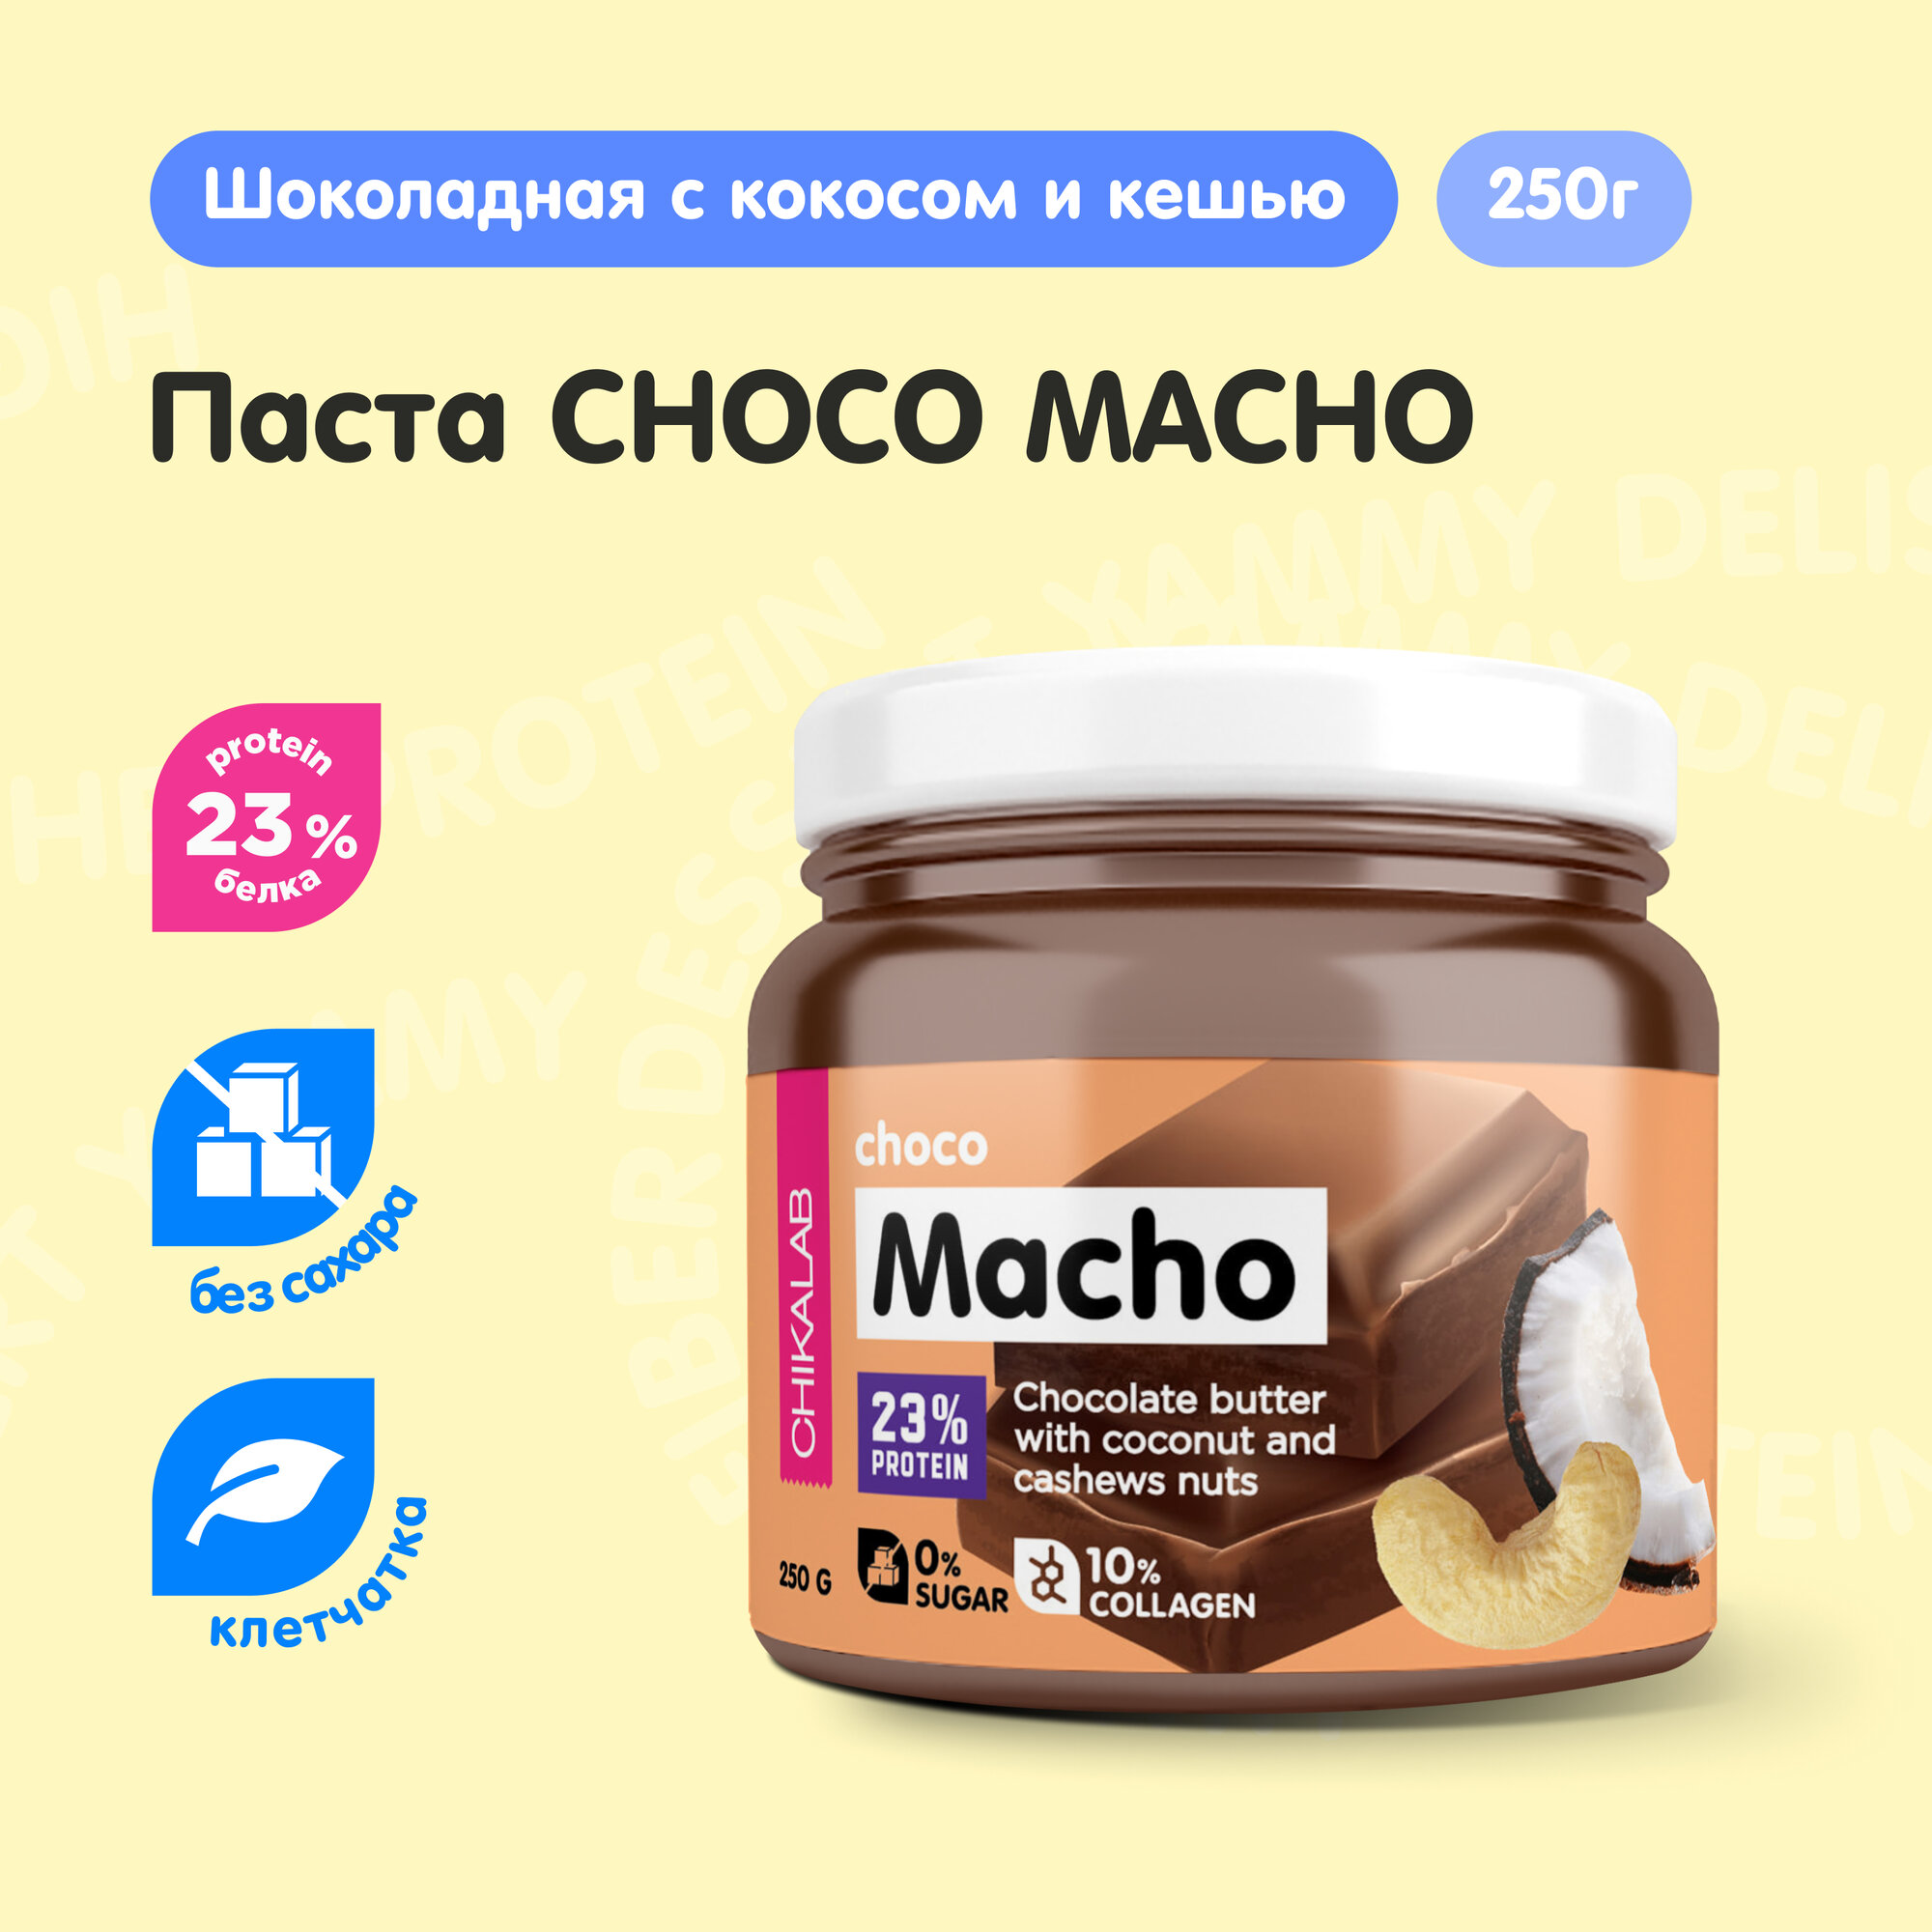 CHIKALAB Шоколадная паста без сахара с кокосом, кешью и коллагеном "MACHO", 250 гр